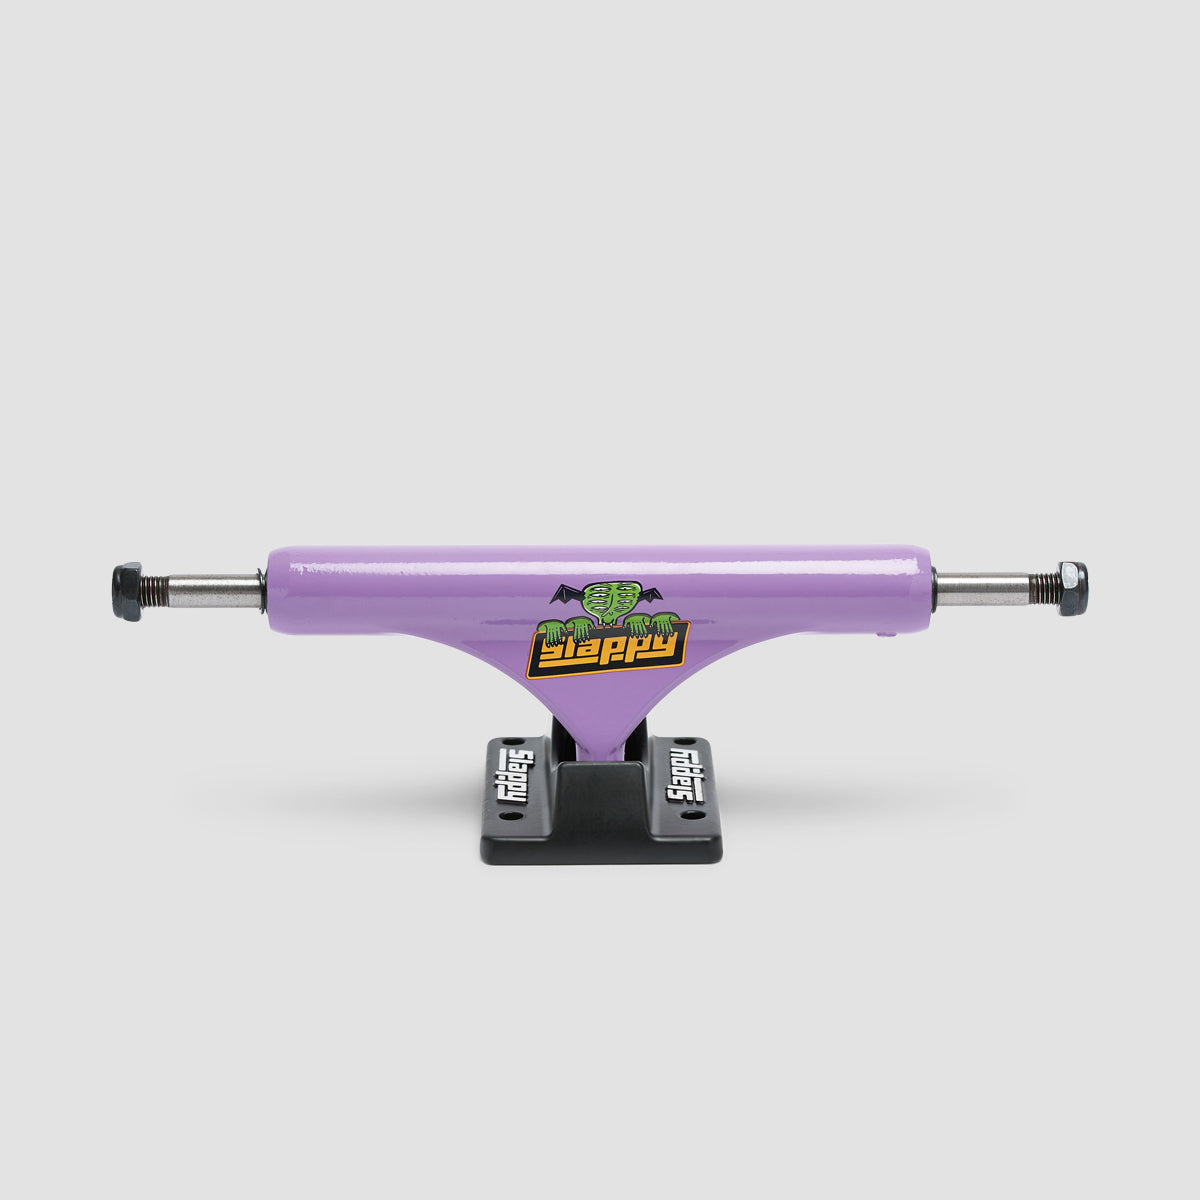 Slappy ST1 Curb Creeper Us Skateboard Trucks 1 Pair Purple/Black - 8.5"